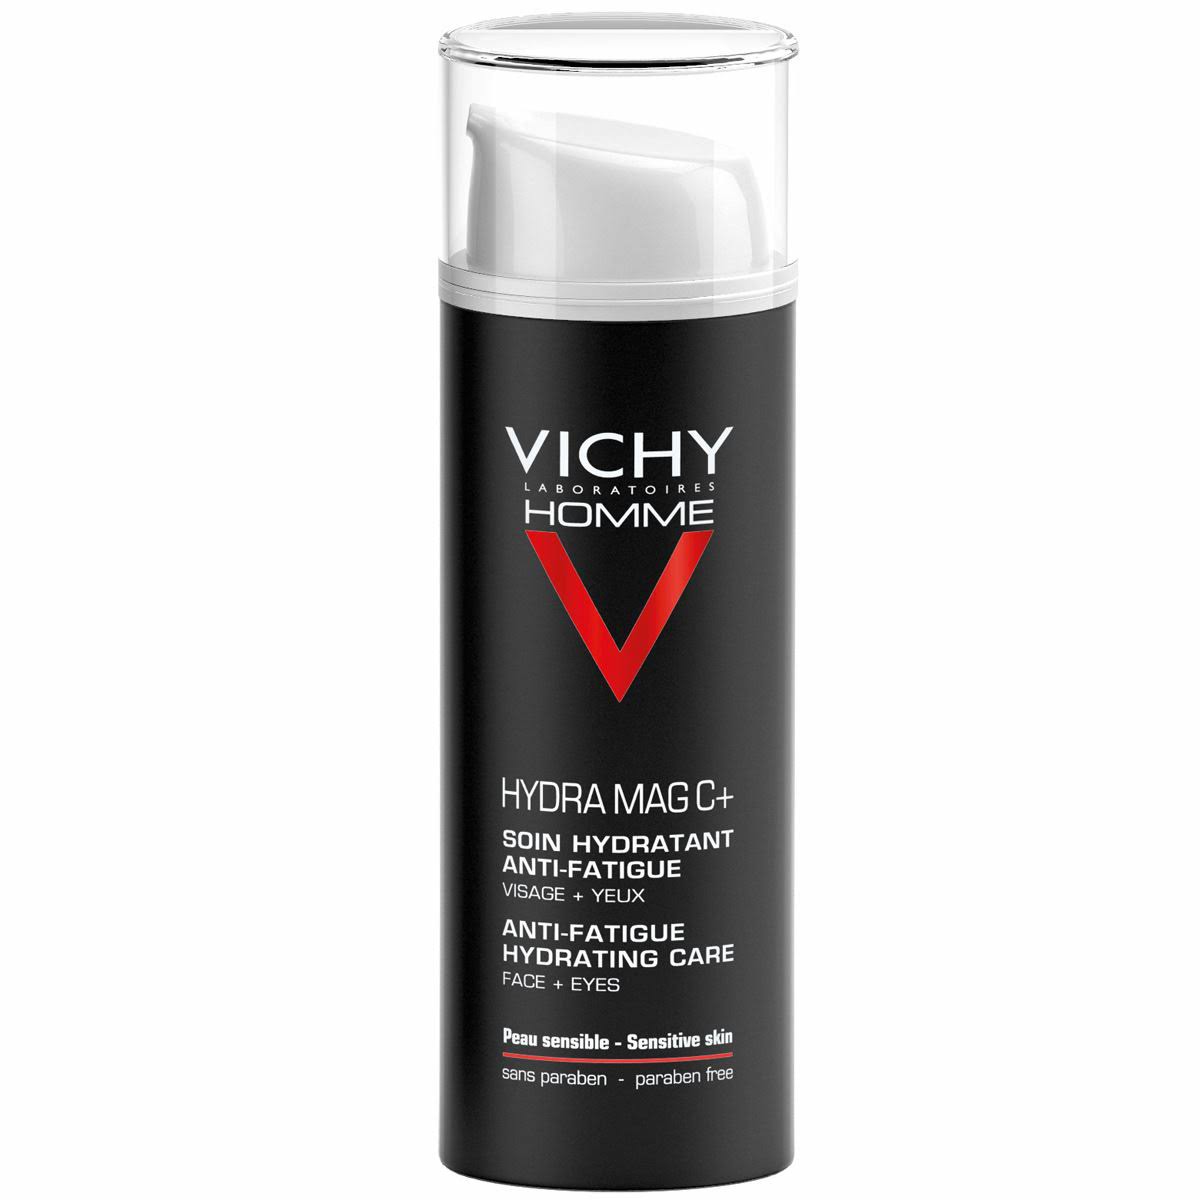 Vichy Homme Hydra Mag C Anti Fatigue Hydrating Care - 50ml